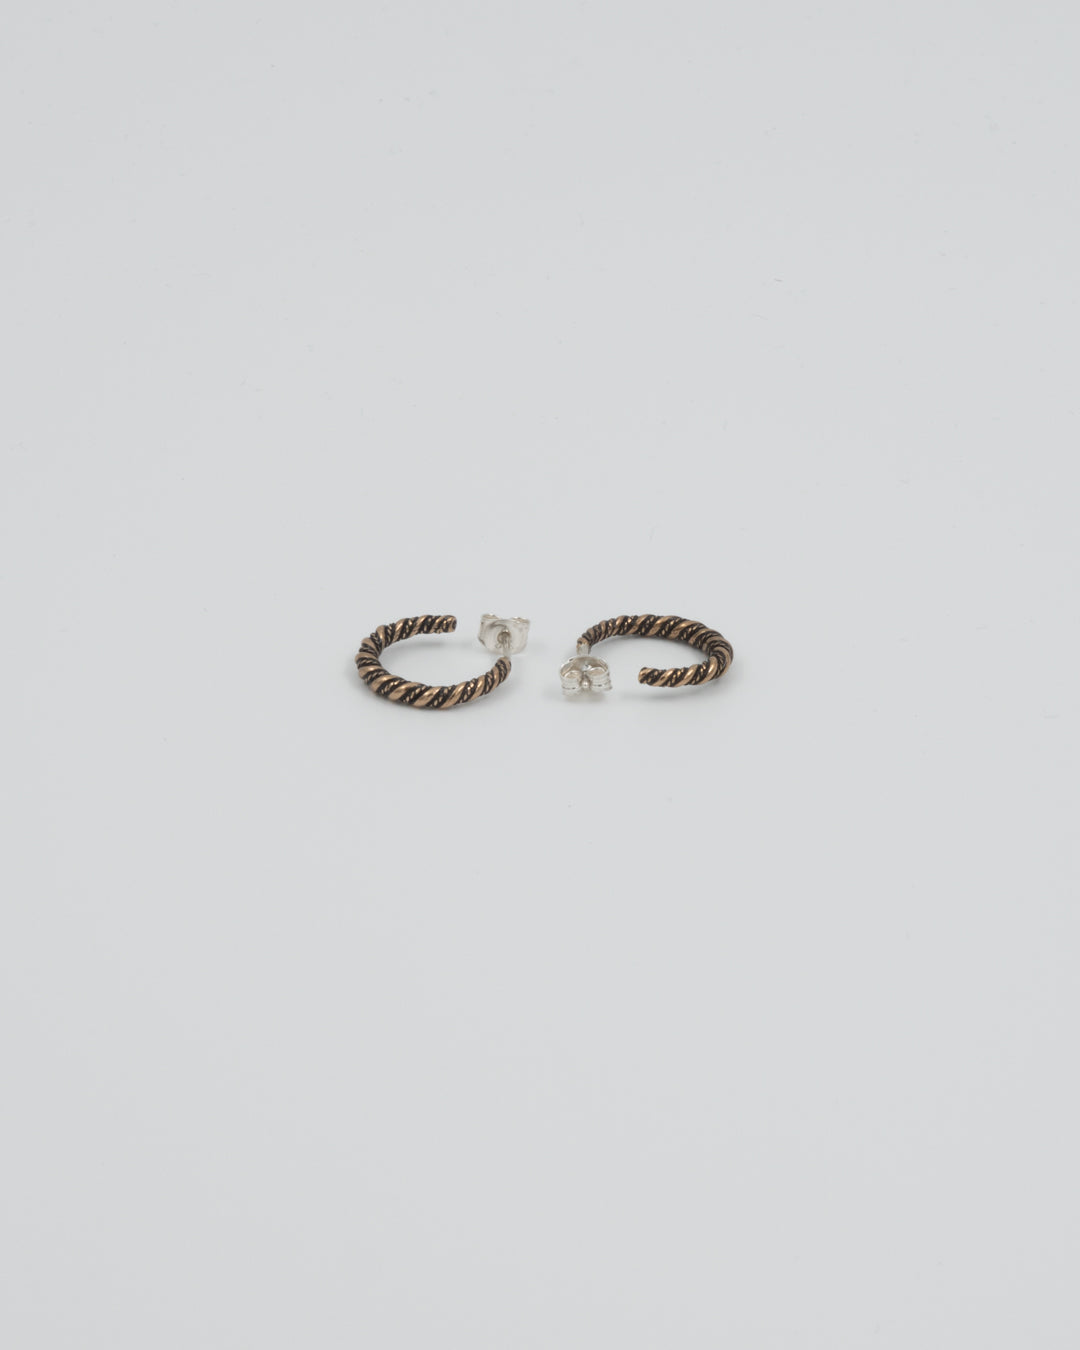 Kept Haliko's spiral earrings bronze